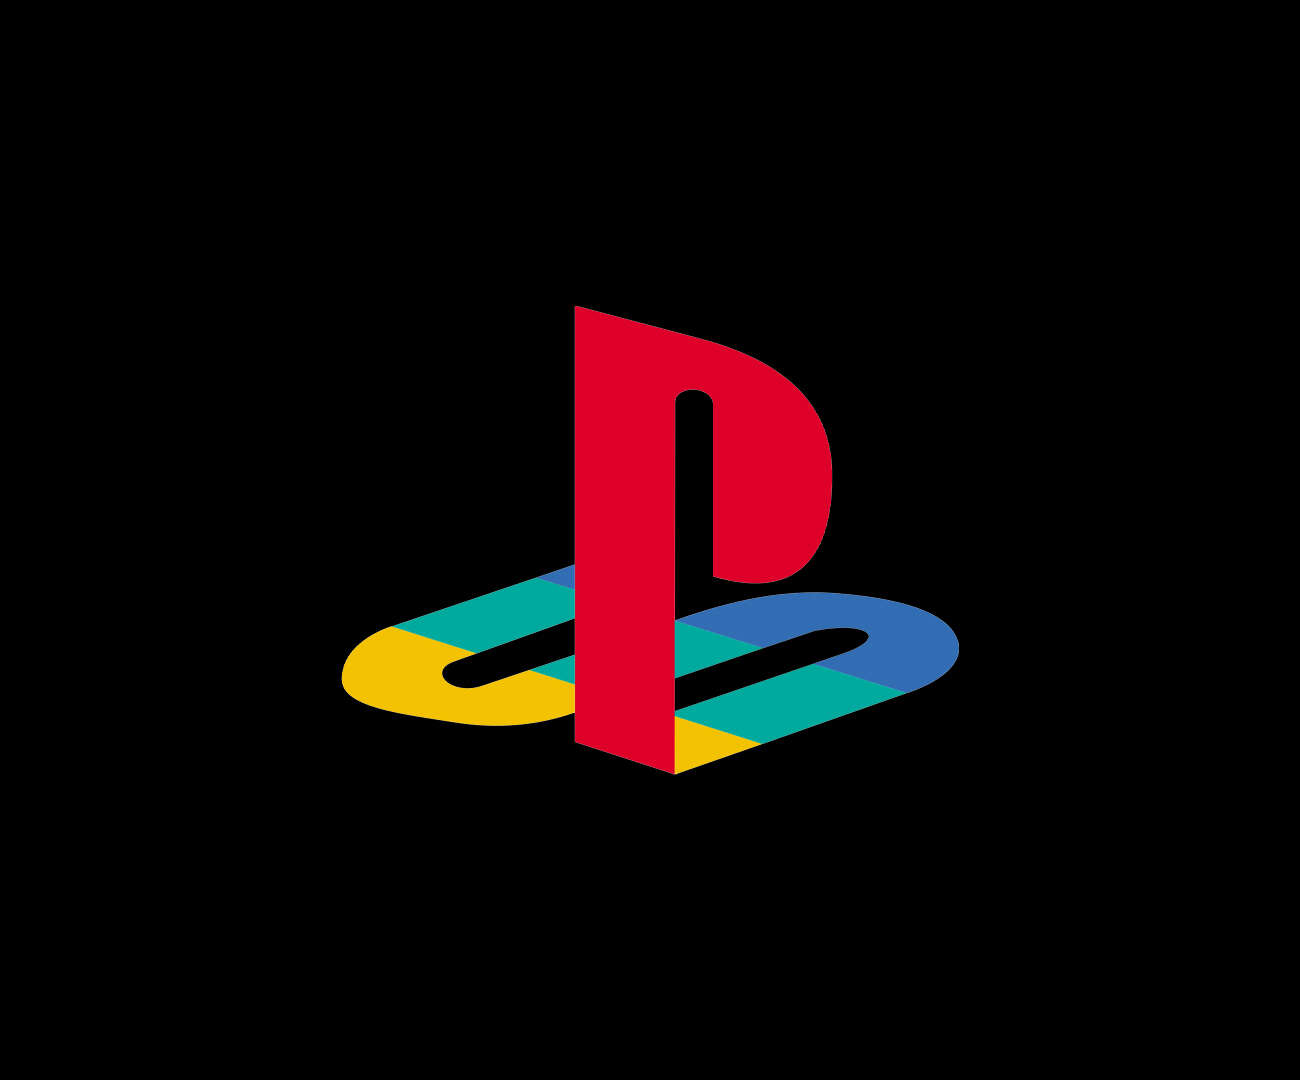 ps4, logo